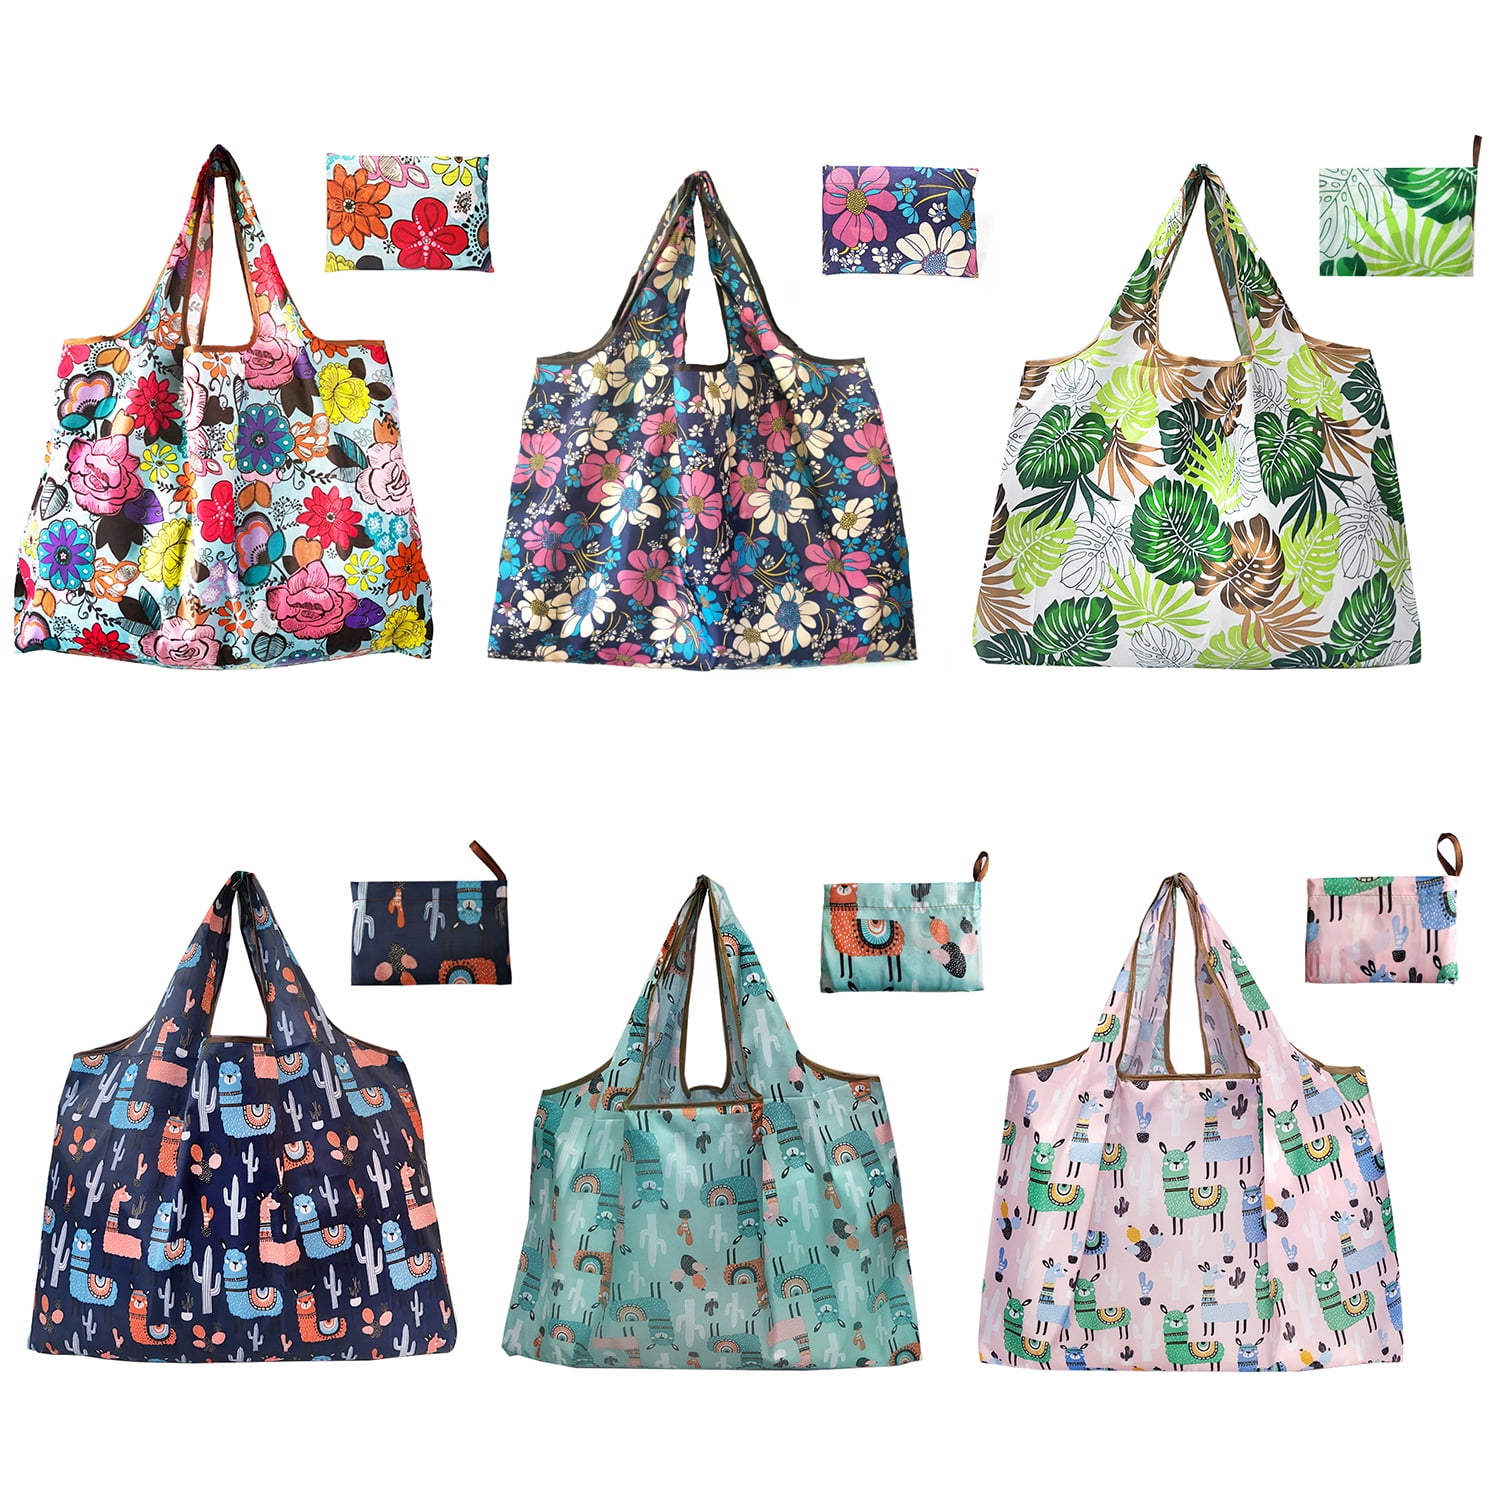 Reusable Grocery Bag Patterns